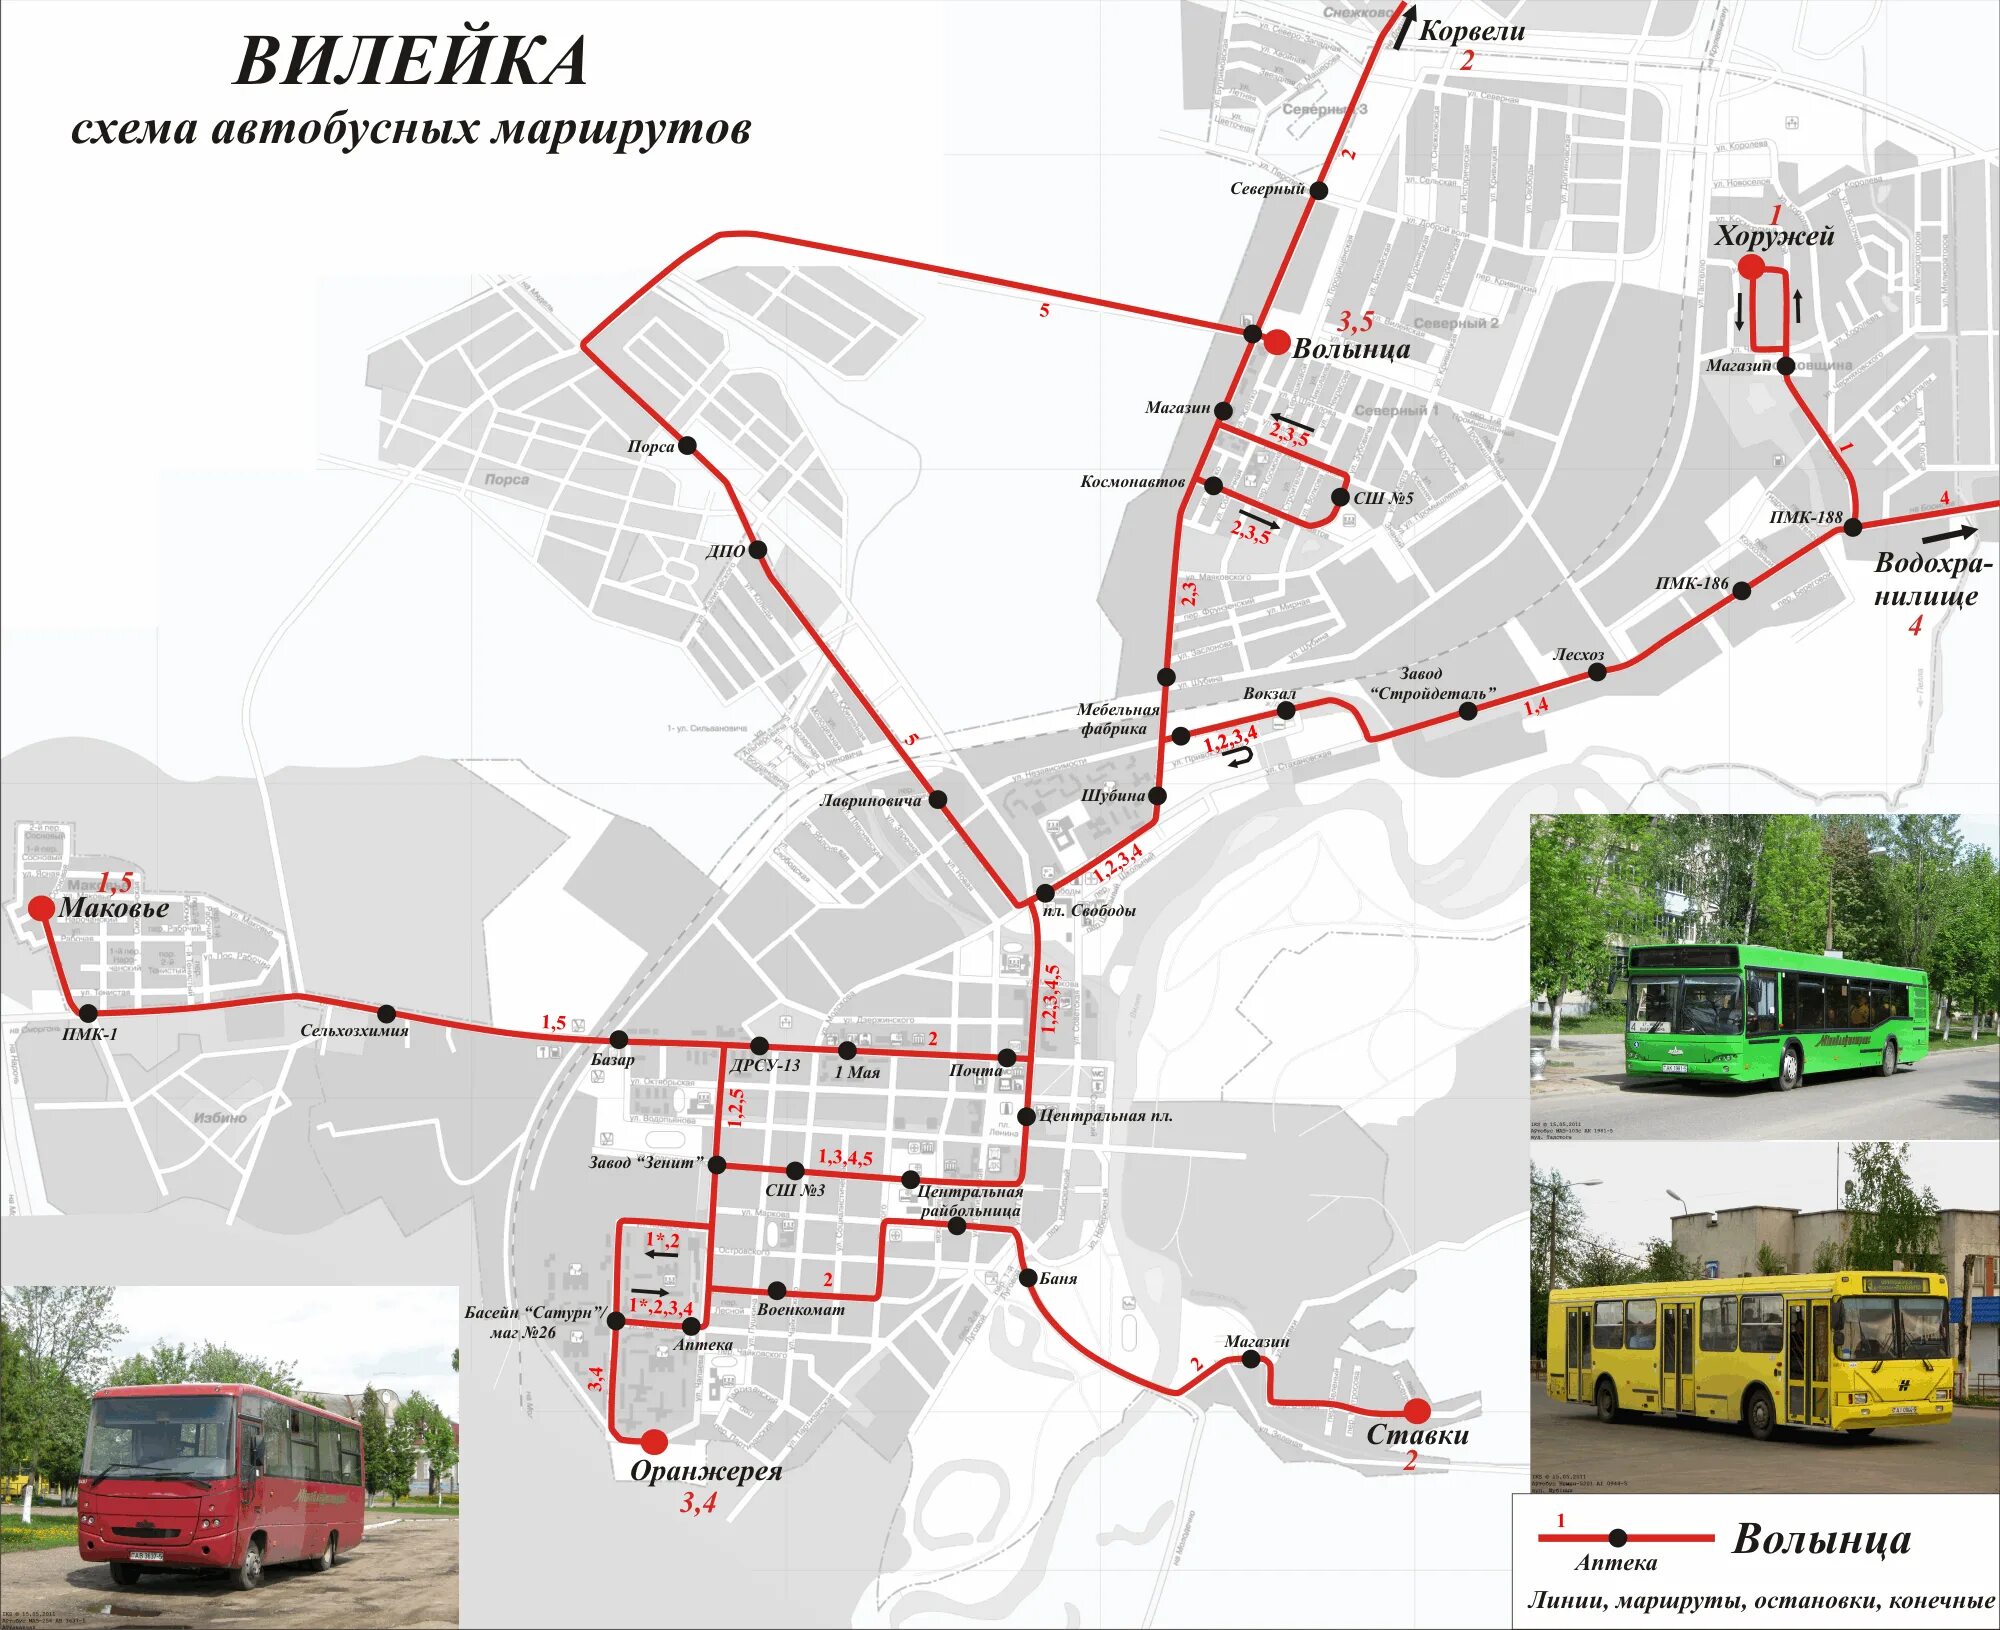 Автобусные маршруты. Схема автобусных маршрутов. Карта автобусов. Маршруты городских автобусов. Схема городских маршрутов